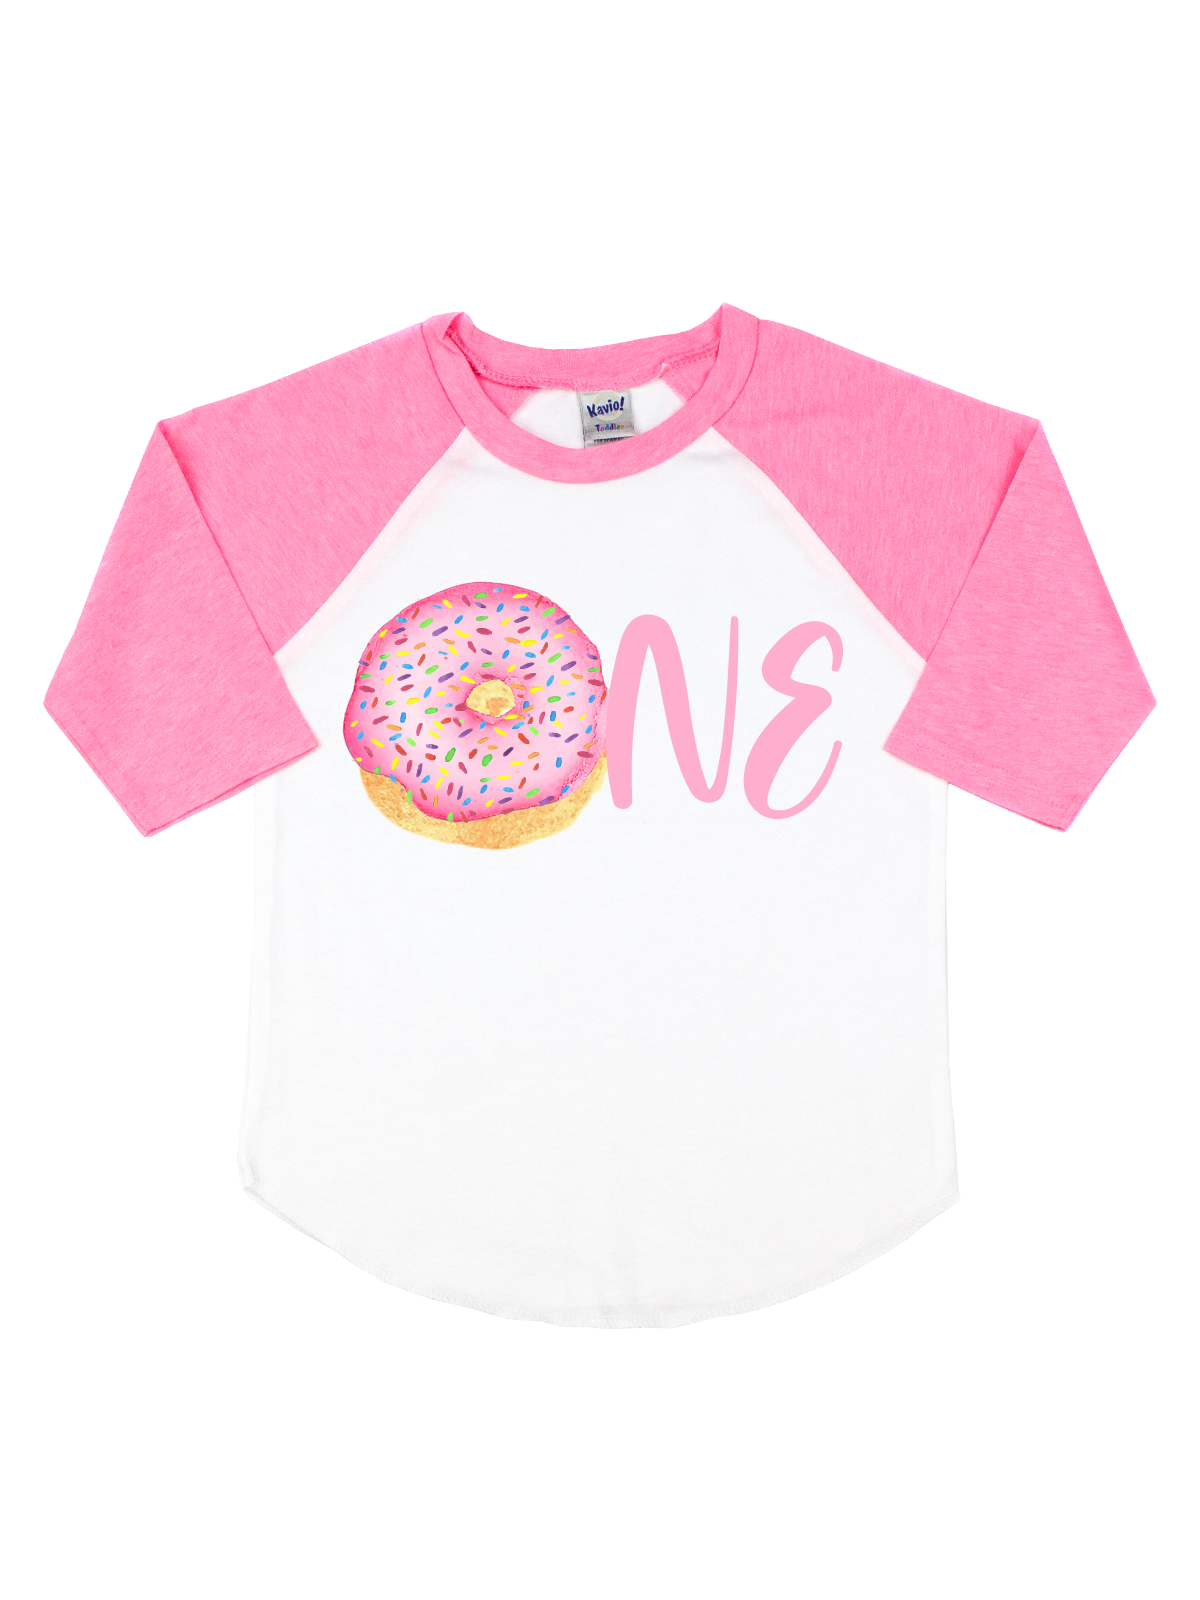 ONE pink sprinkle donut raglan shirt